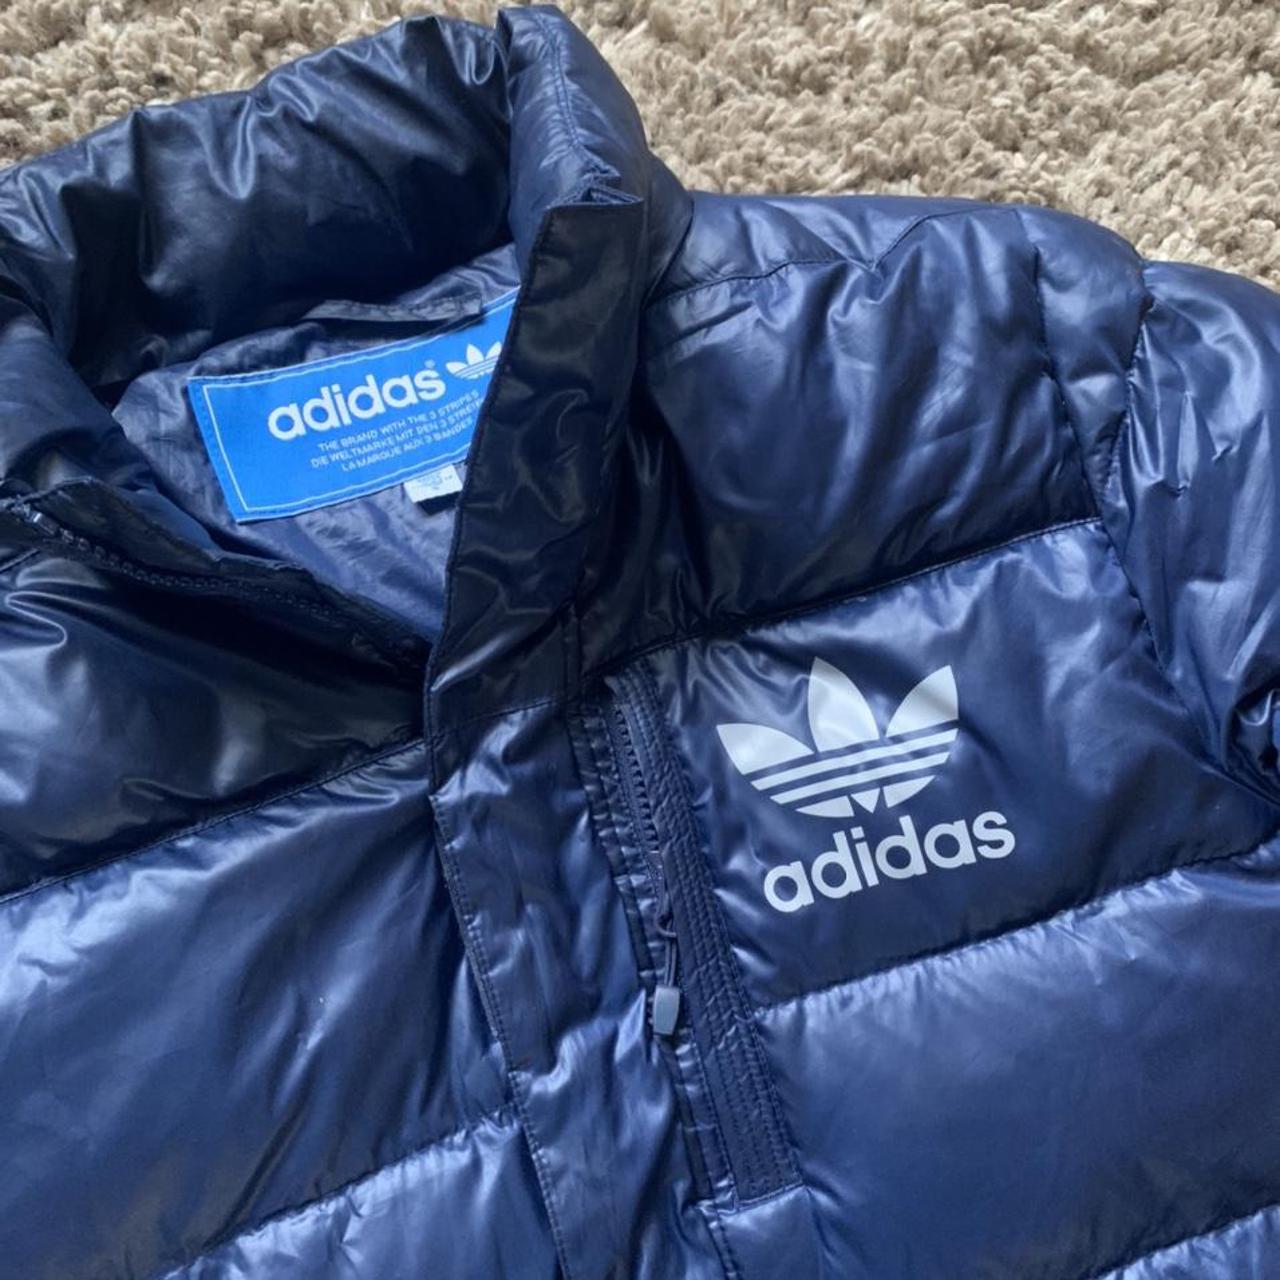 Adidas Women's and Blue Jacket | Depop